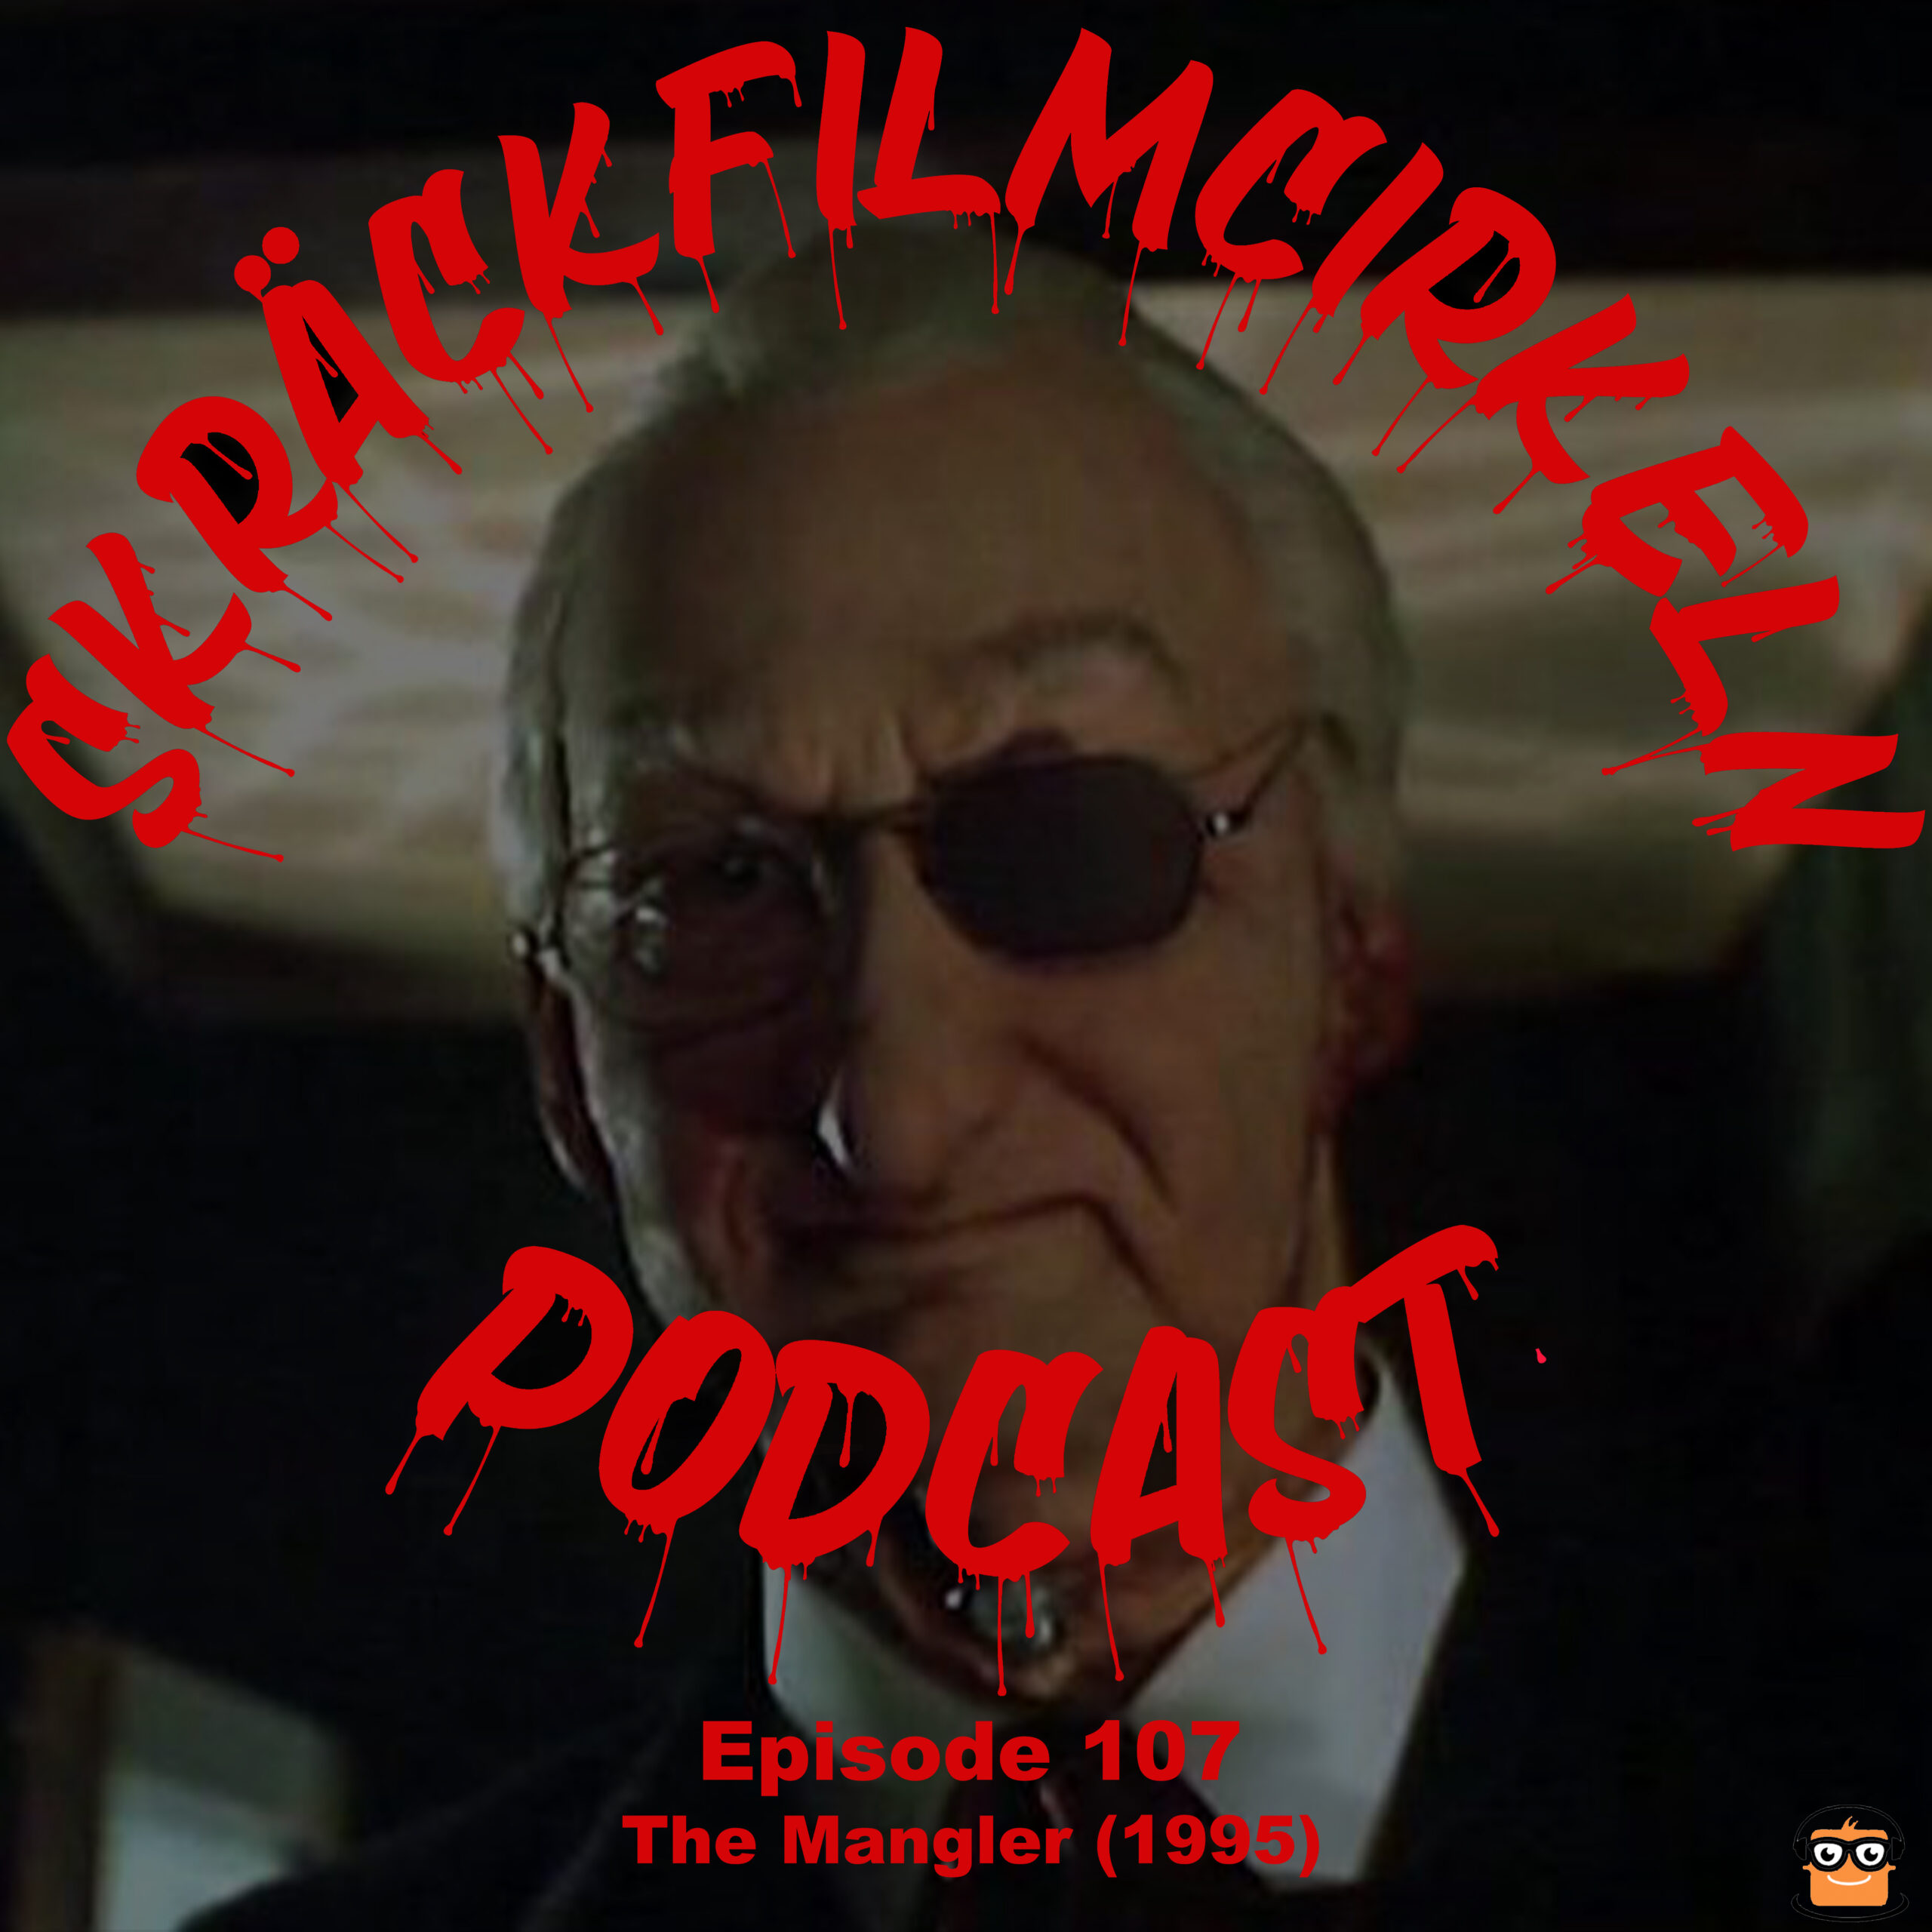 Episode 107 – The Mangler (1995)